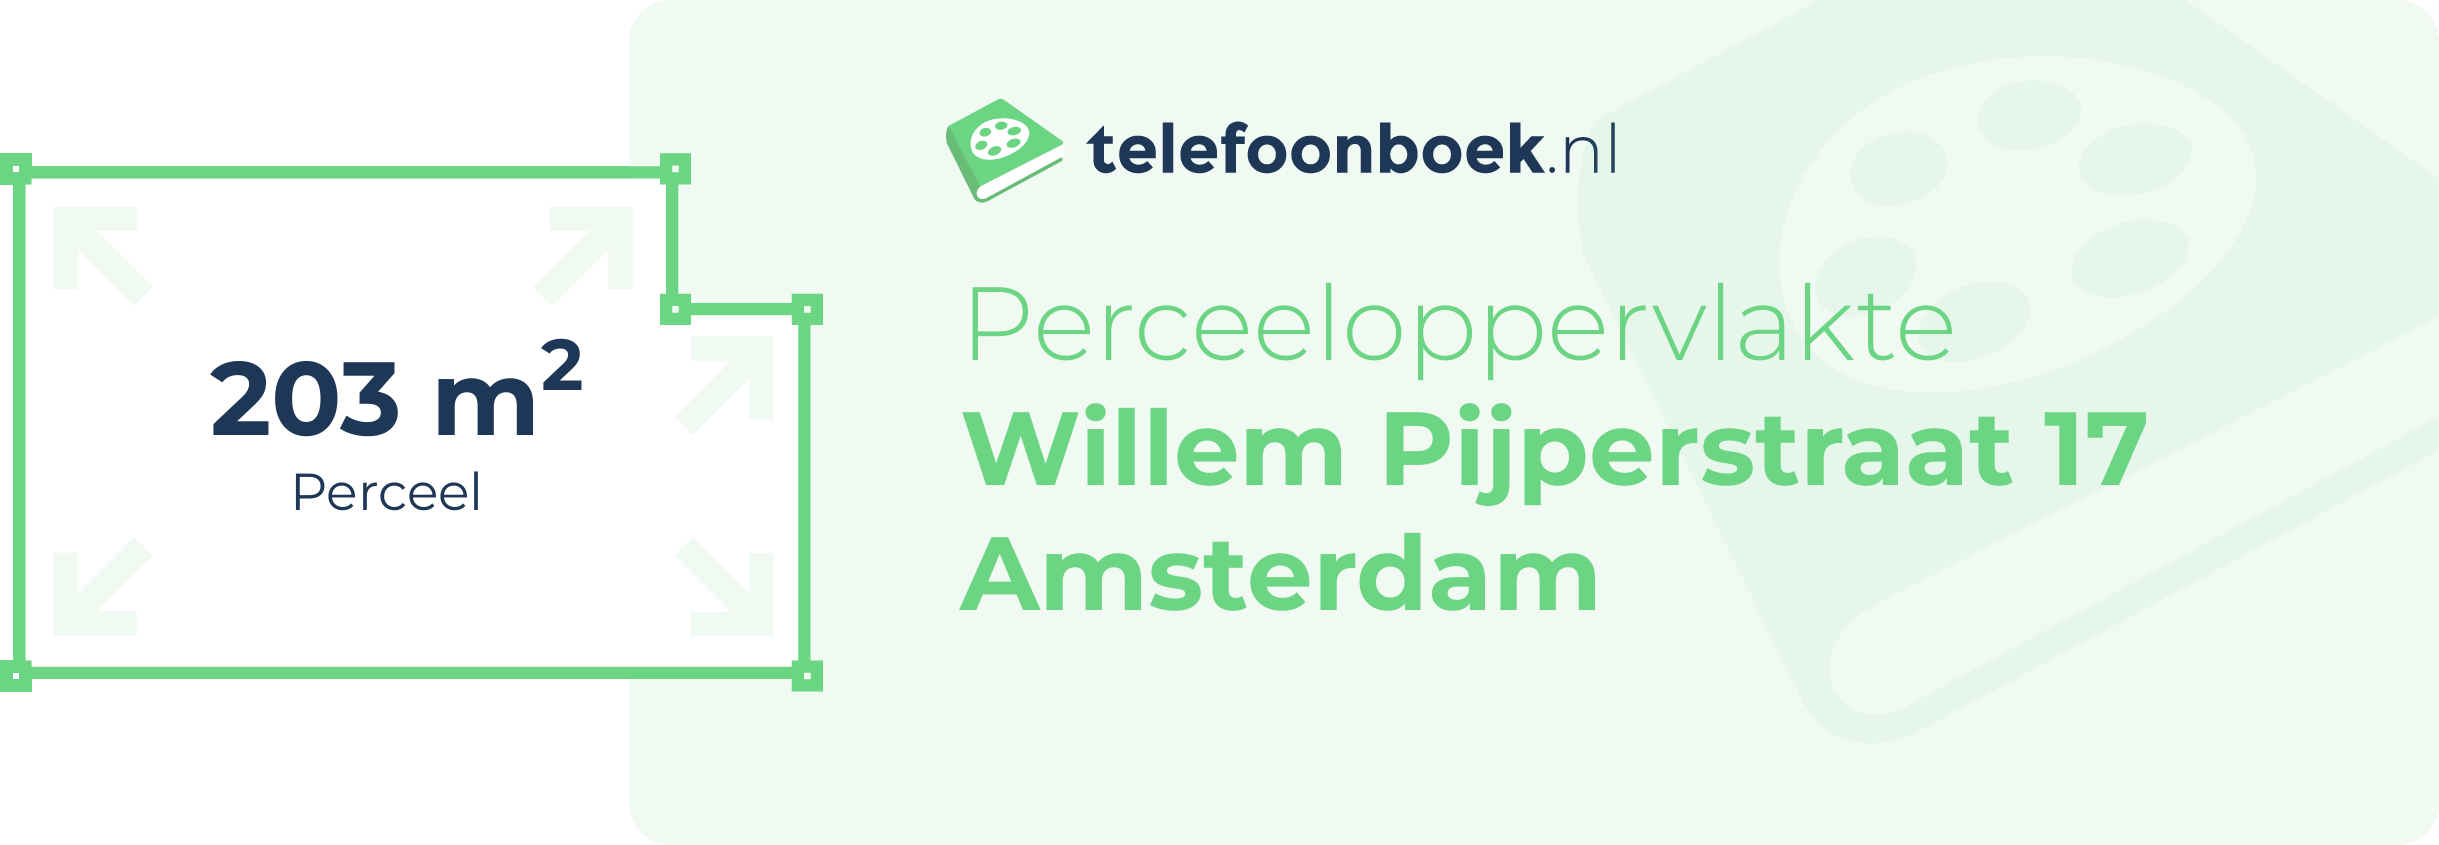 Perceeloppervlakte Willem Pijperstraat 17 Amsterdam